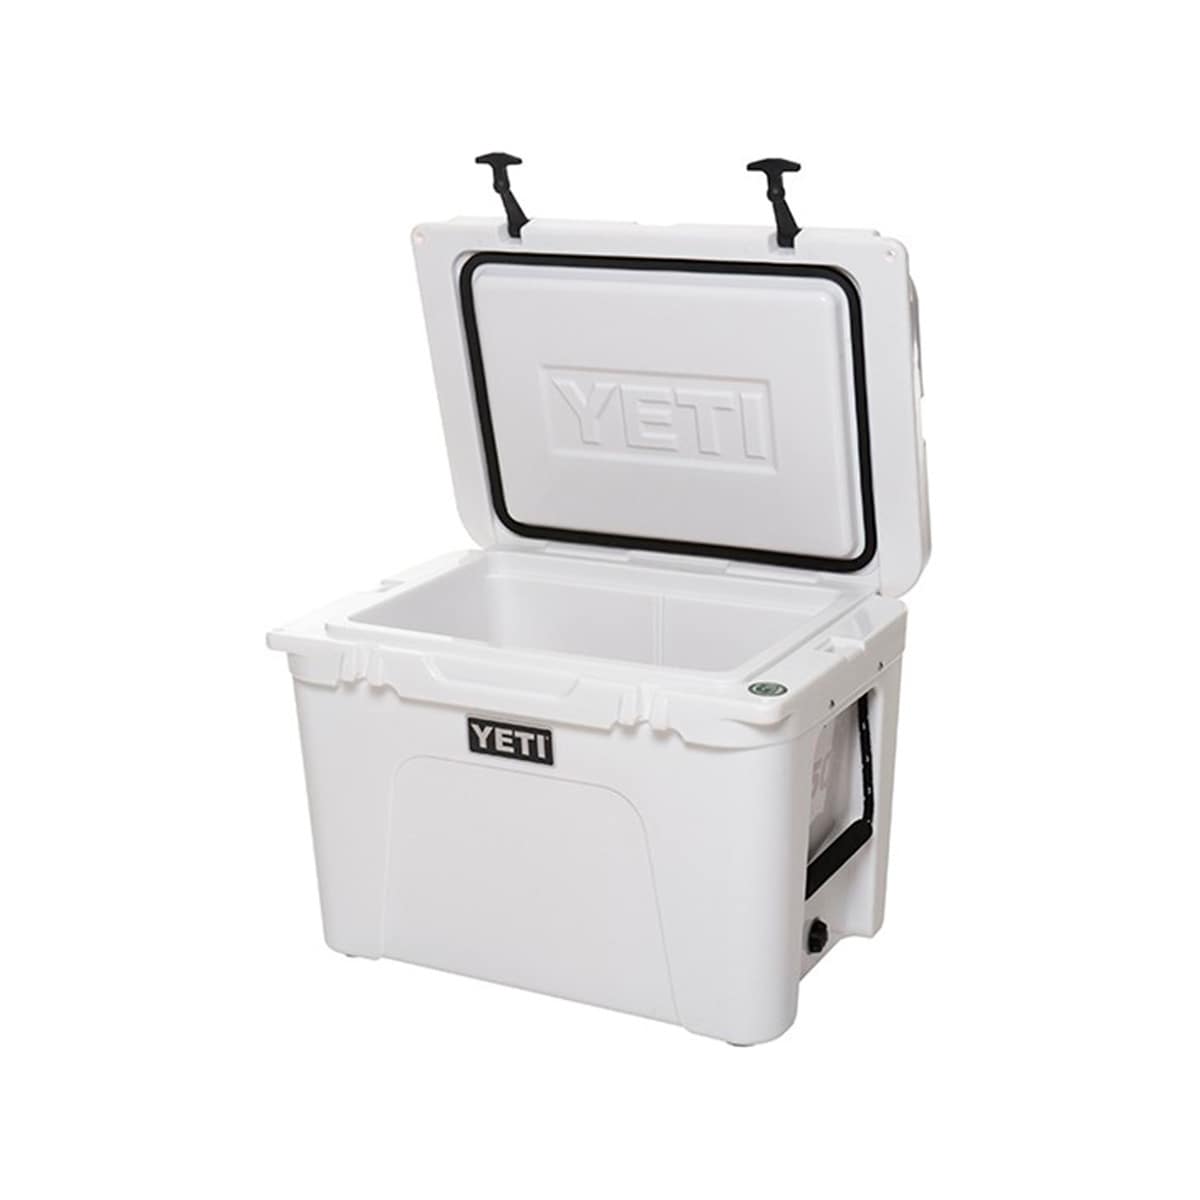 Yeti Tundra Series Cooler Featuring Ables Logo YT50PWA, 50 Quarts